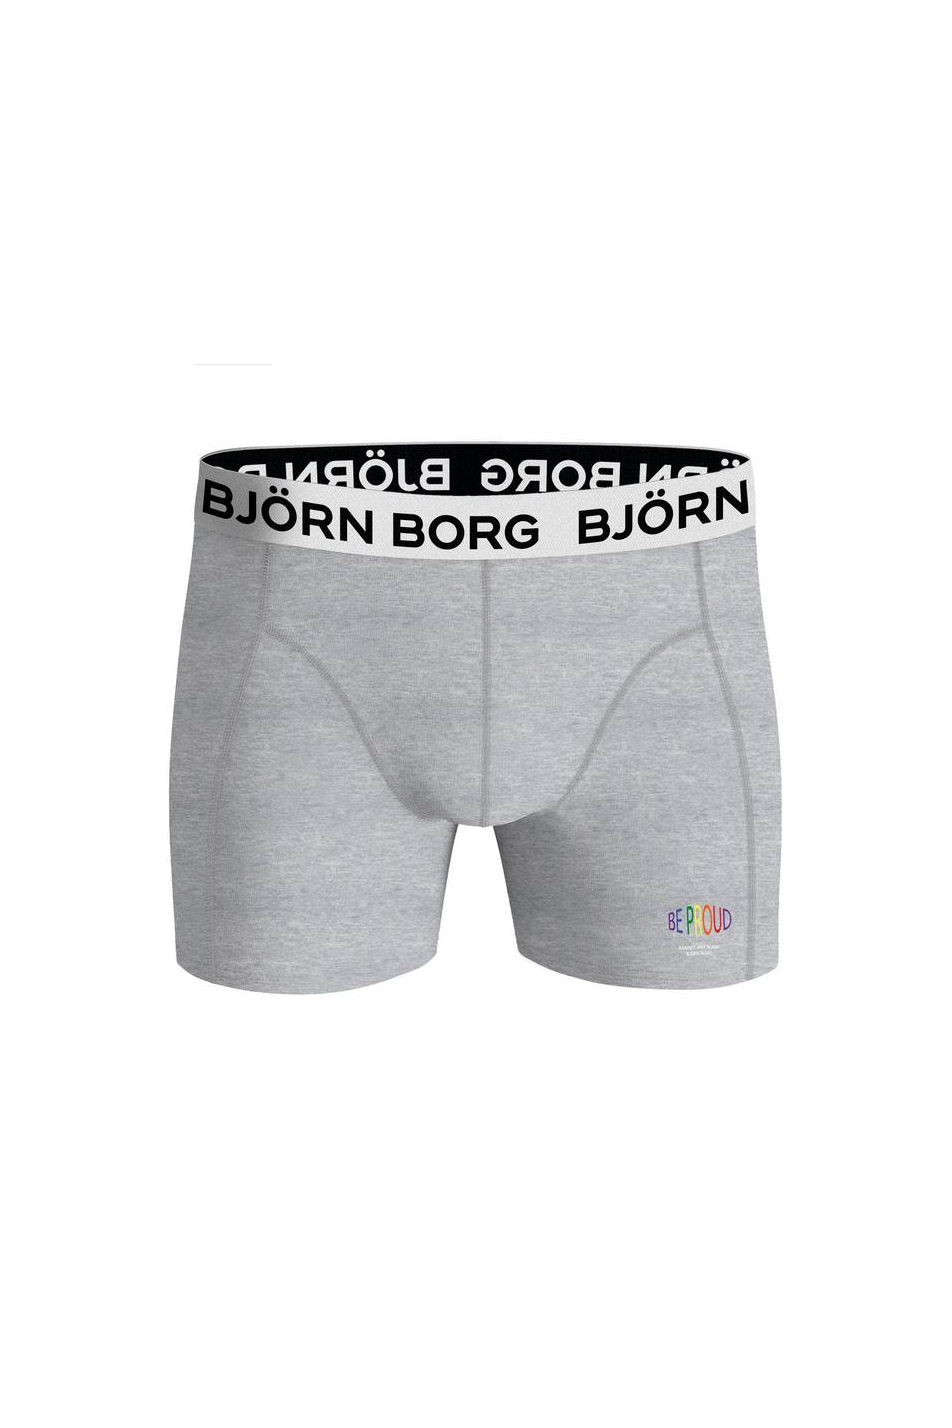 Björn Borg Essential Boxer Men's 3 Pack